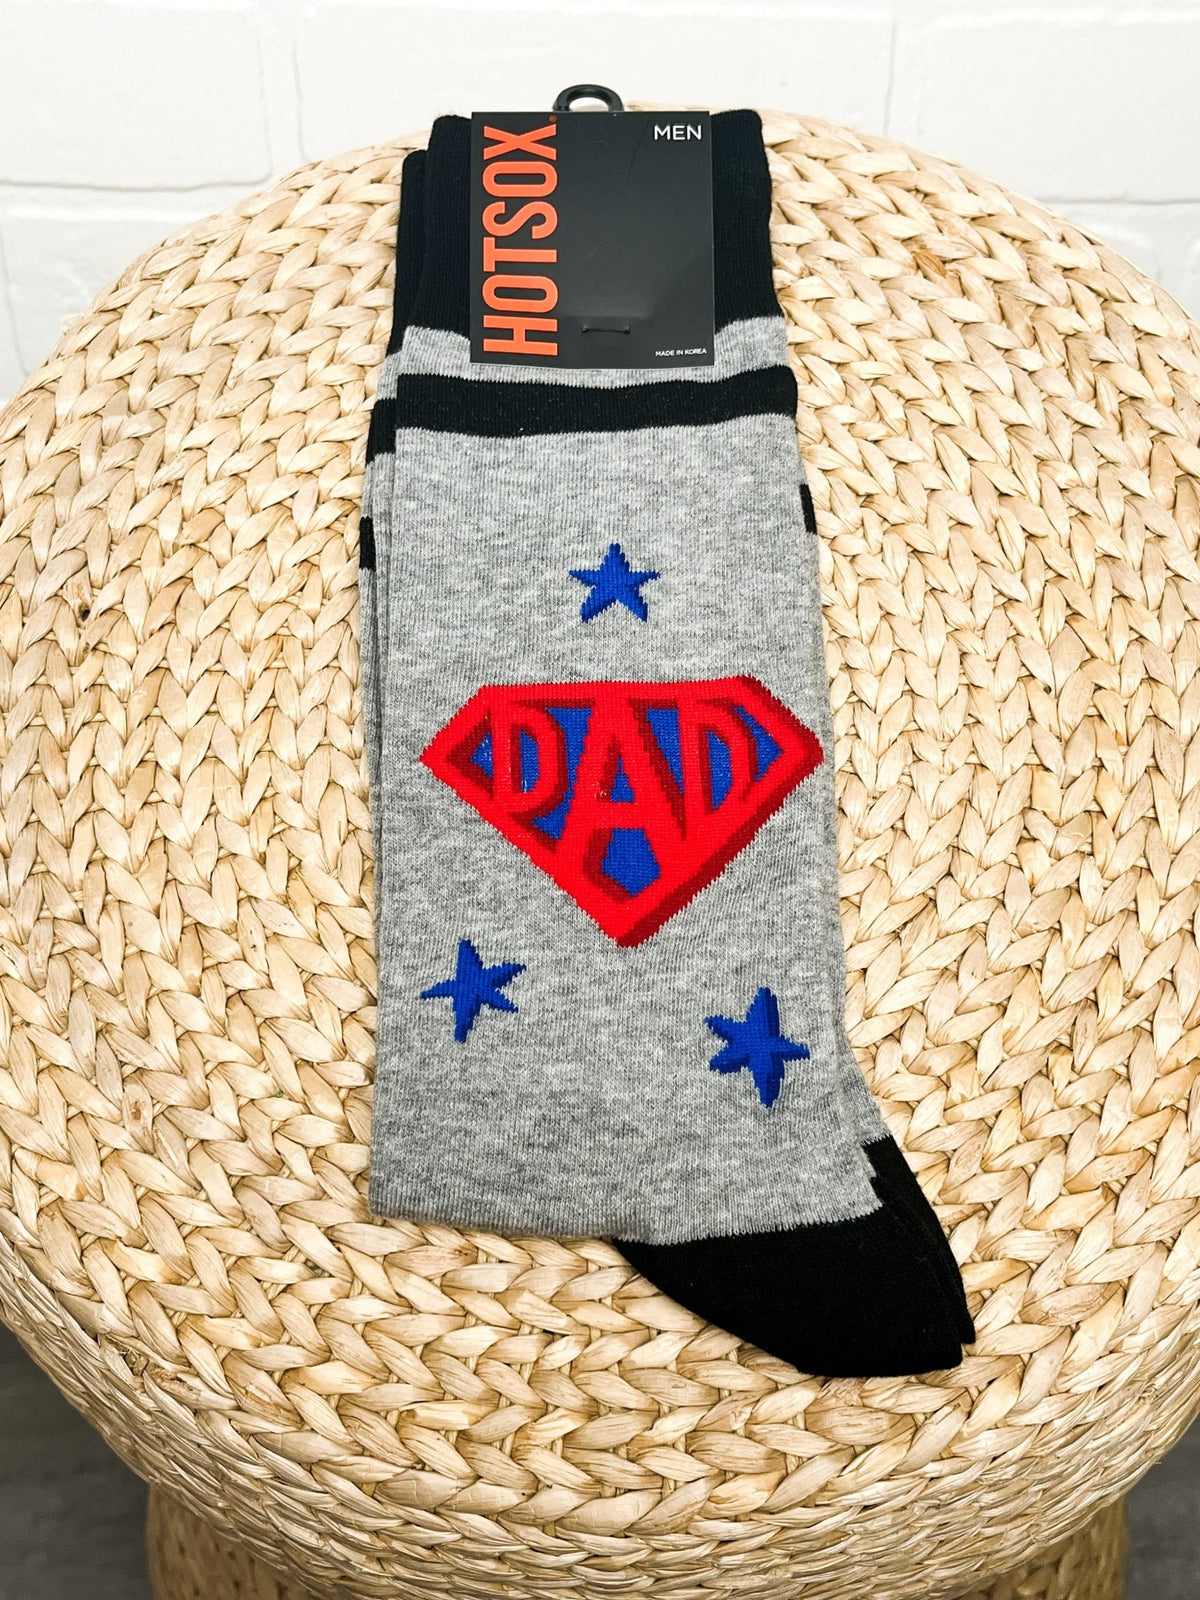 HotSox Superdad socks grey - Trendy Socks at Lush Fashion Lounge Boutique in Oklahoma City